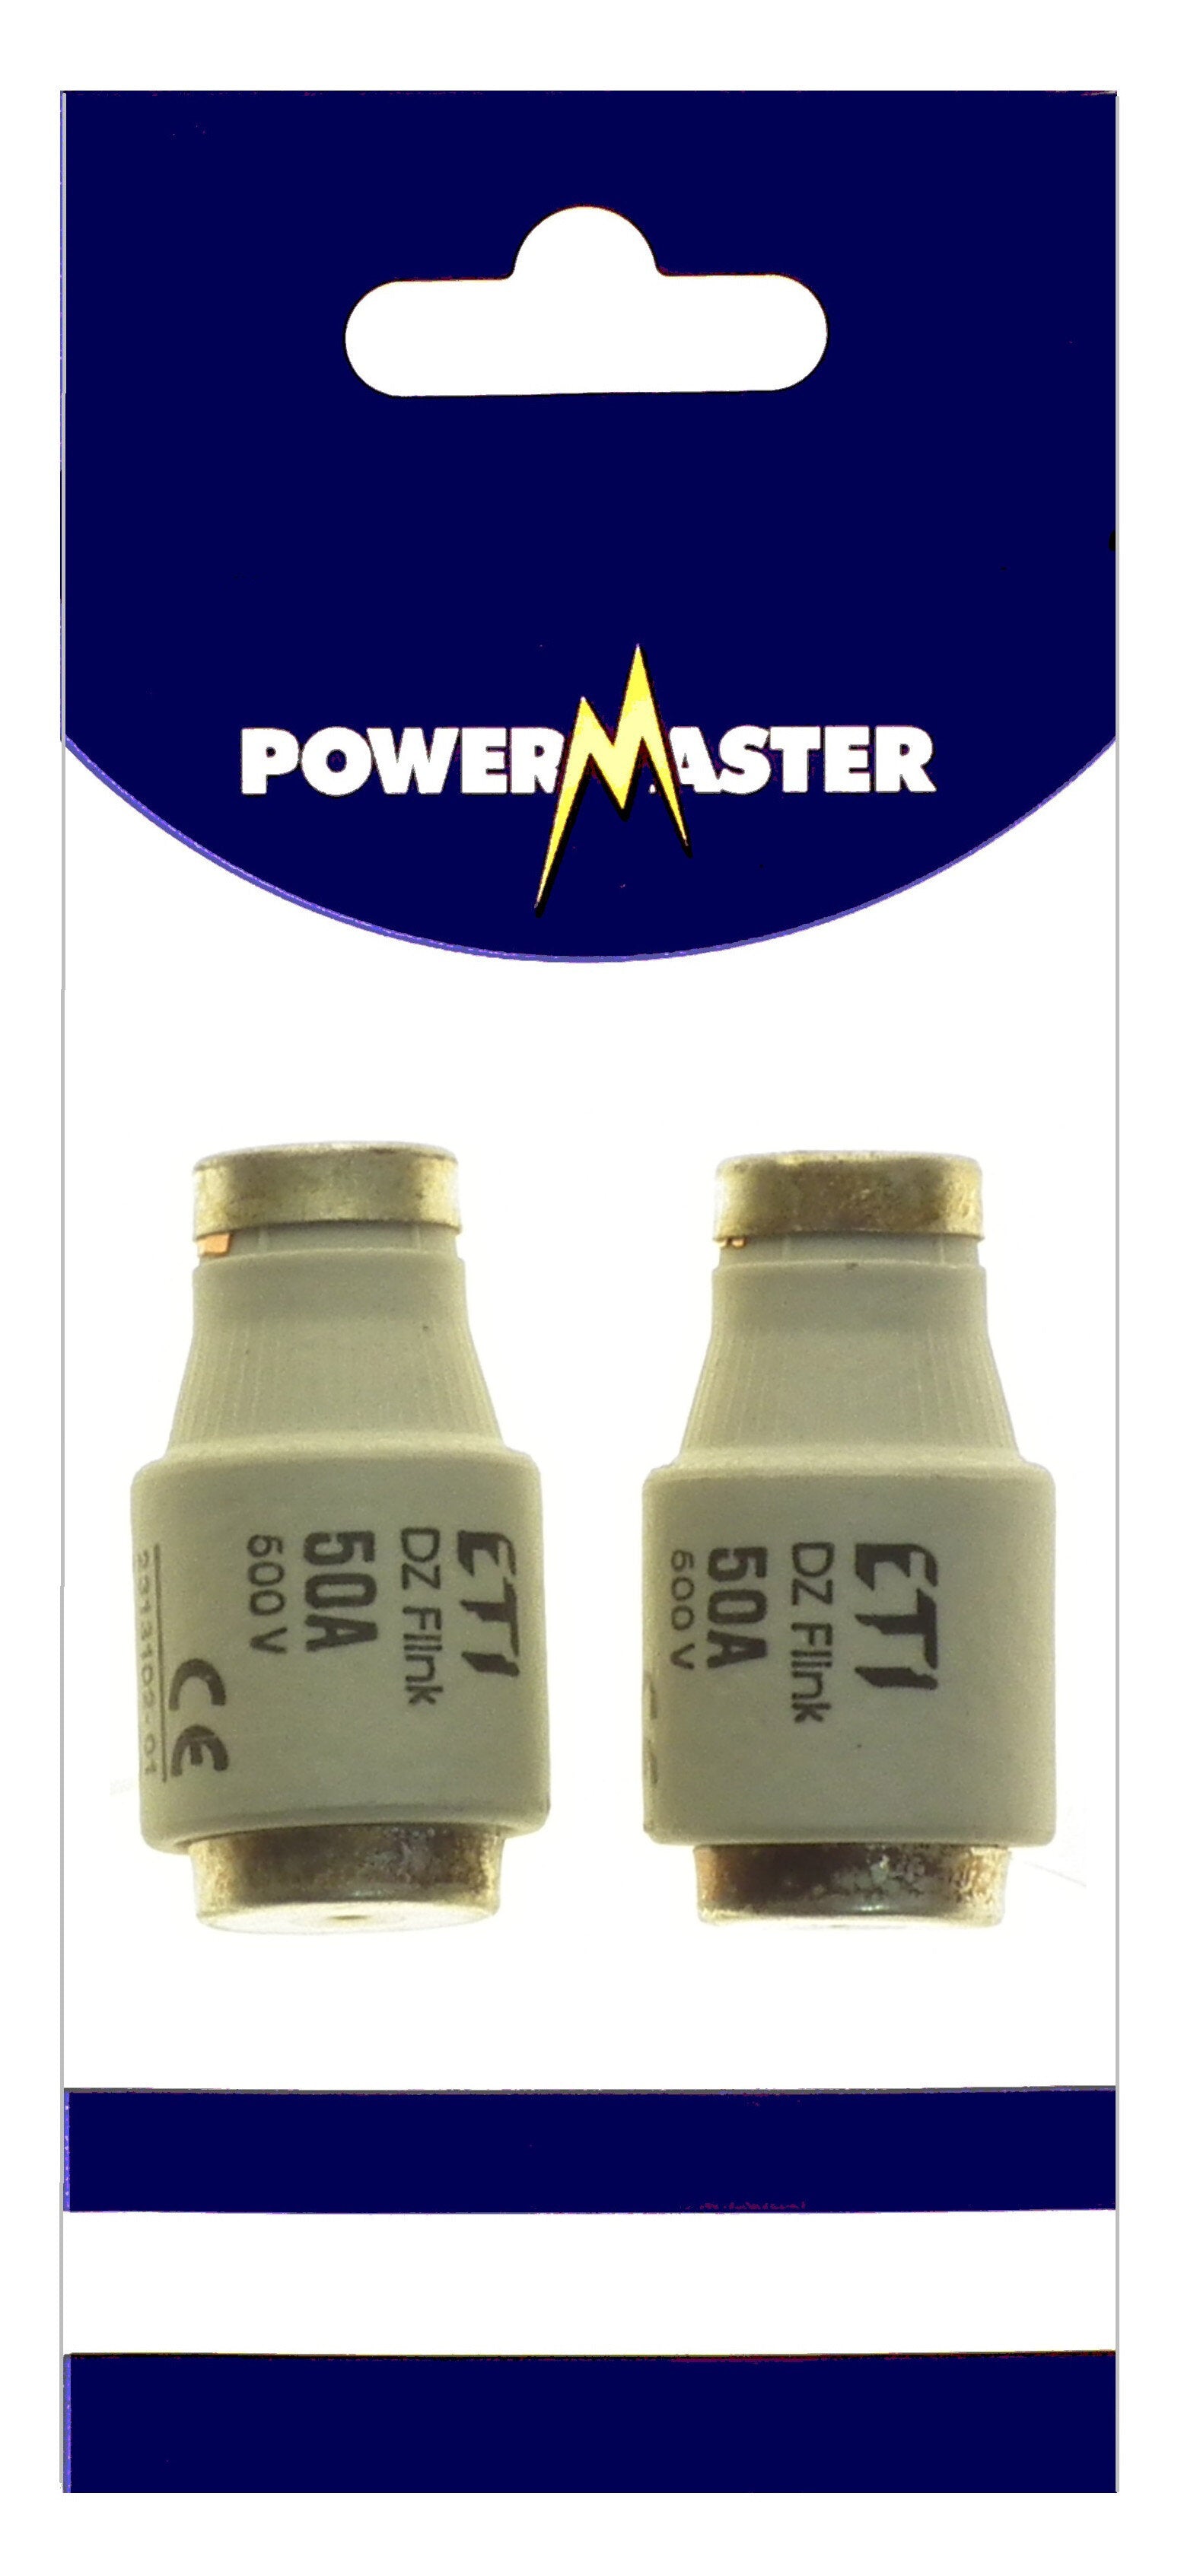 Fuses & Plugs| Powermaster 50 Amp DZ Fuse (2pk) by Weirs of Baggot St